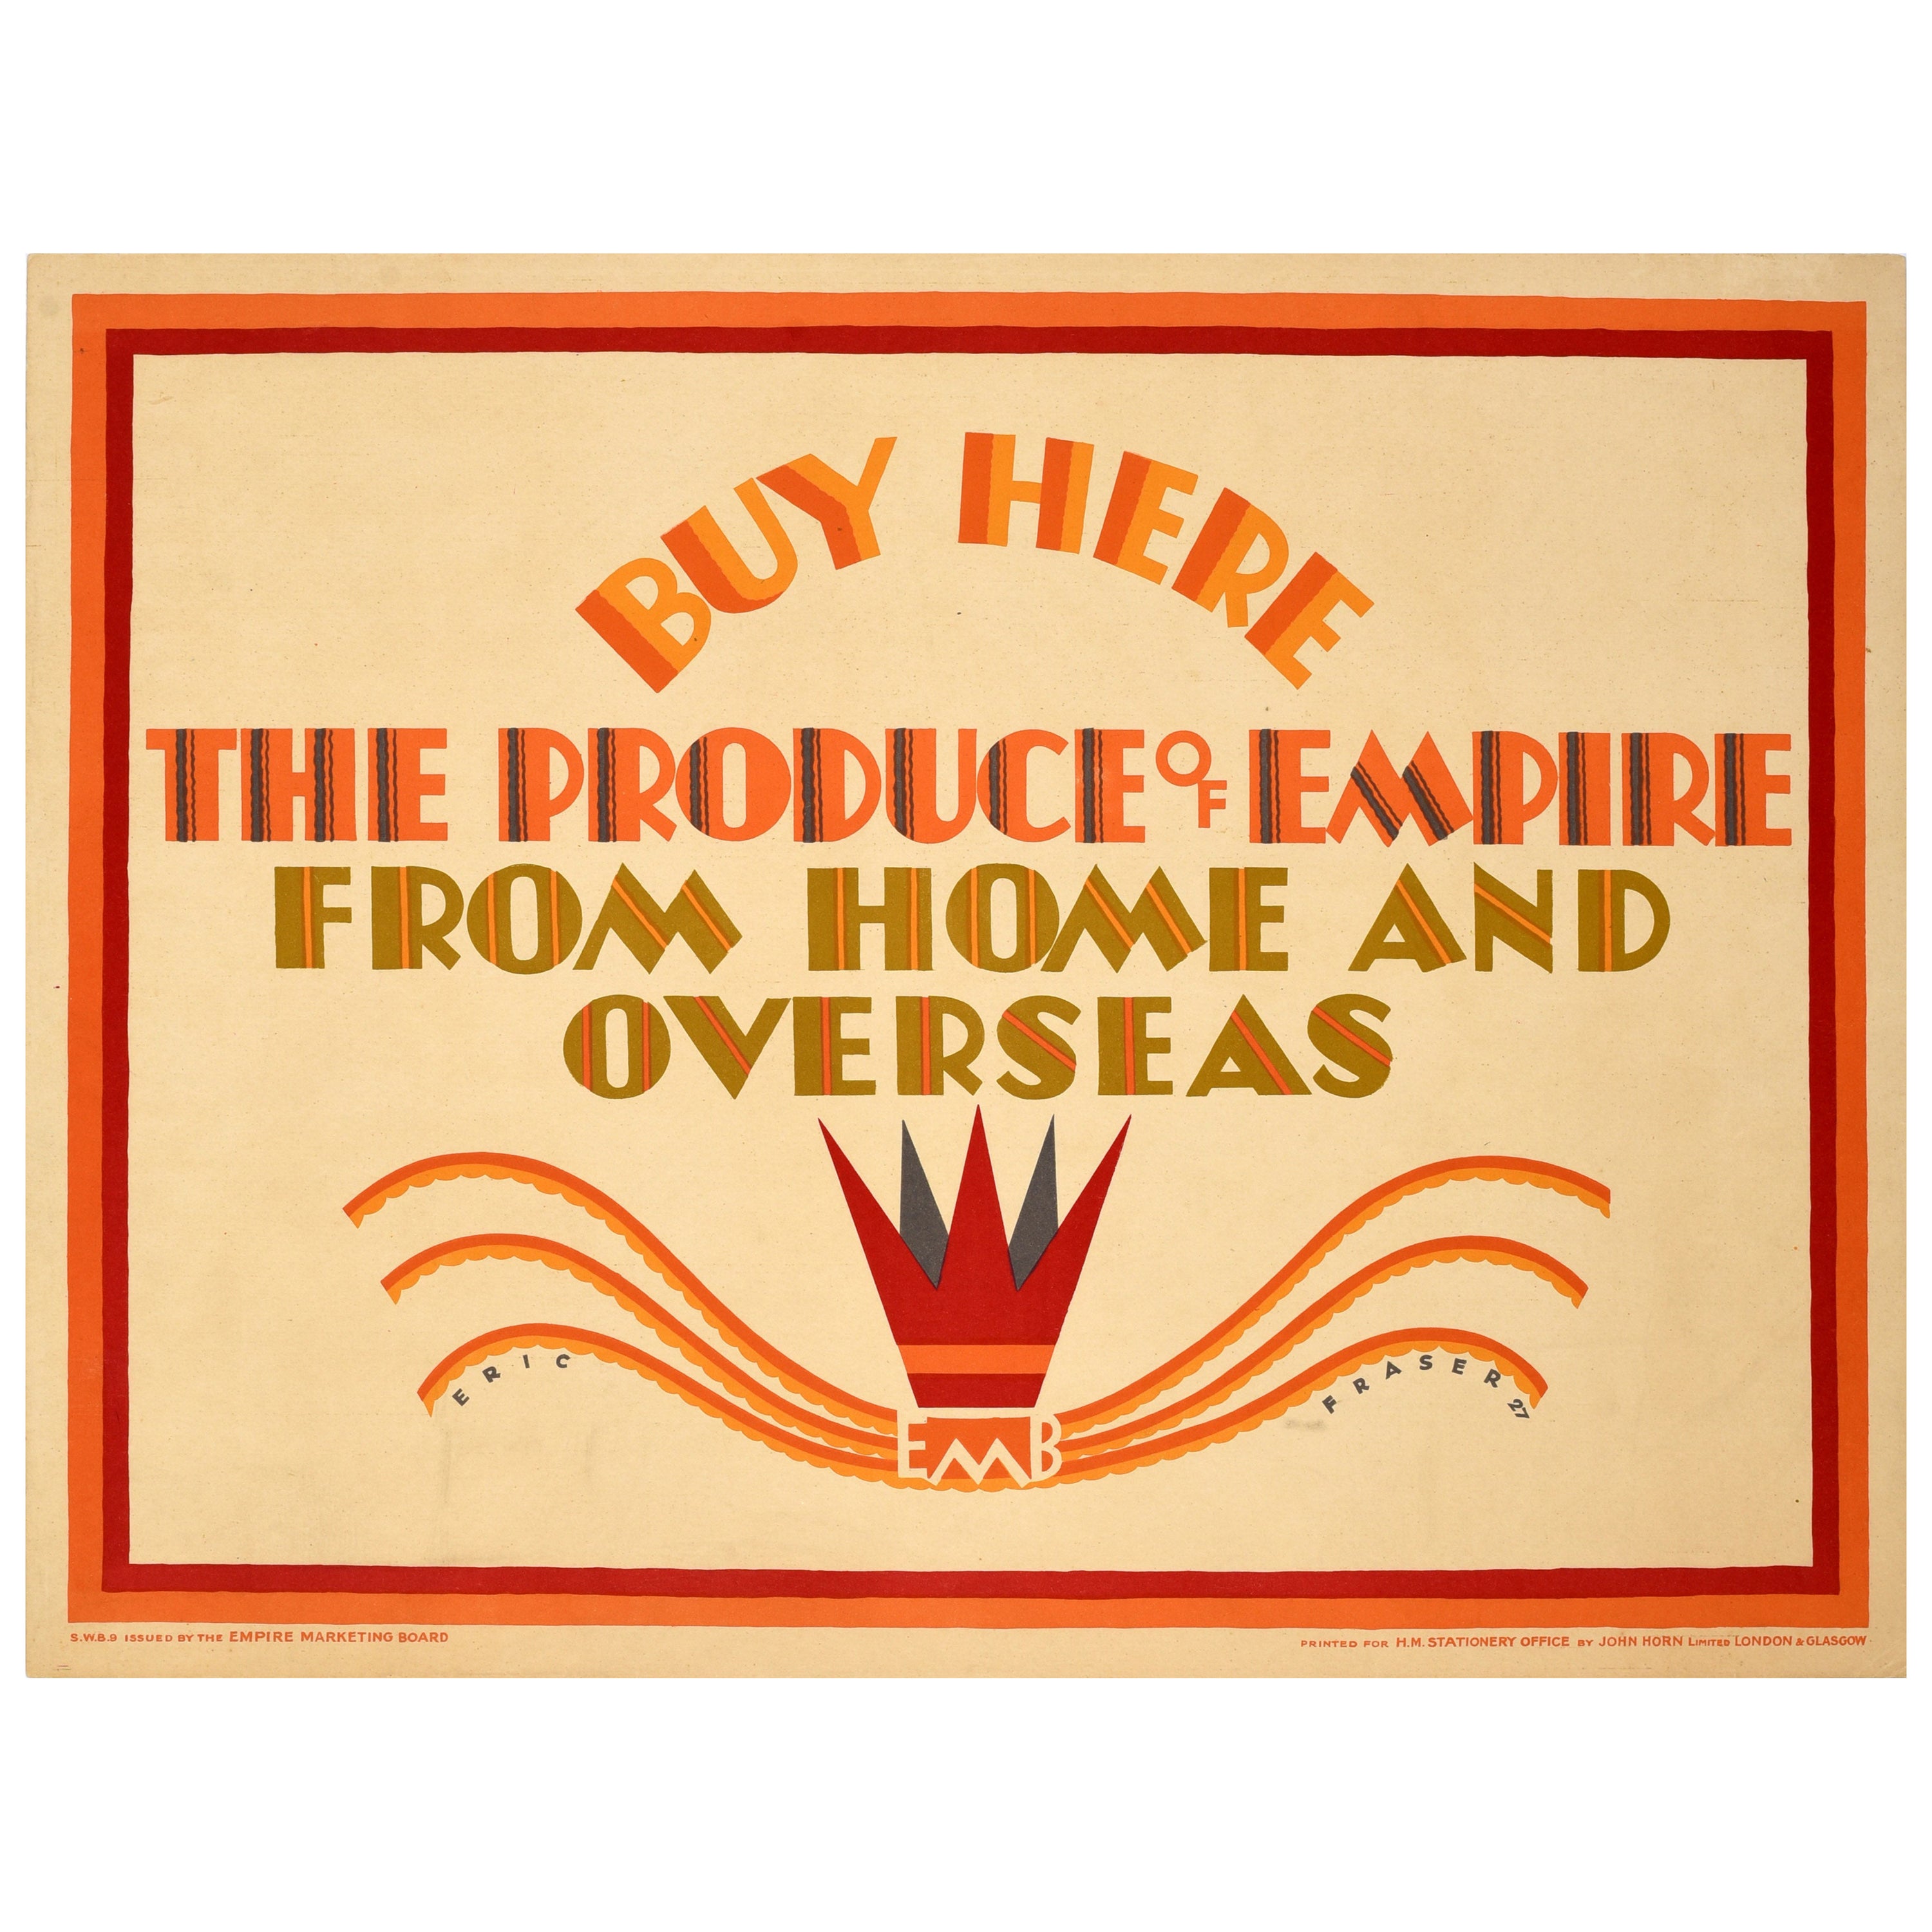 Original Vintage Advertising Poster Buy Here Produce Of Empire Marketing Board